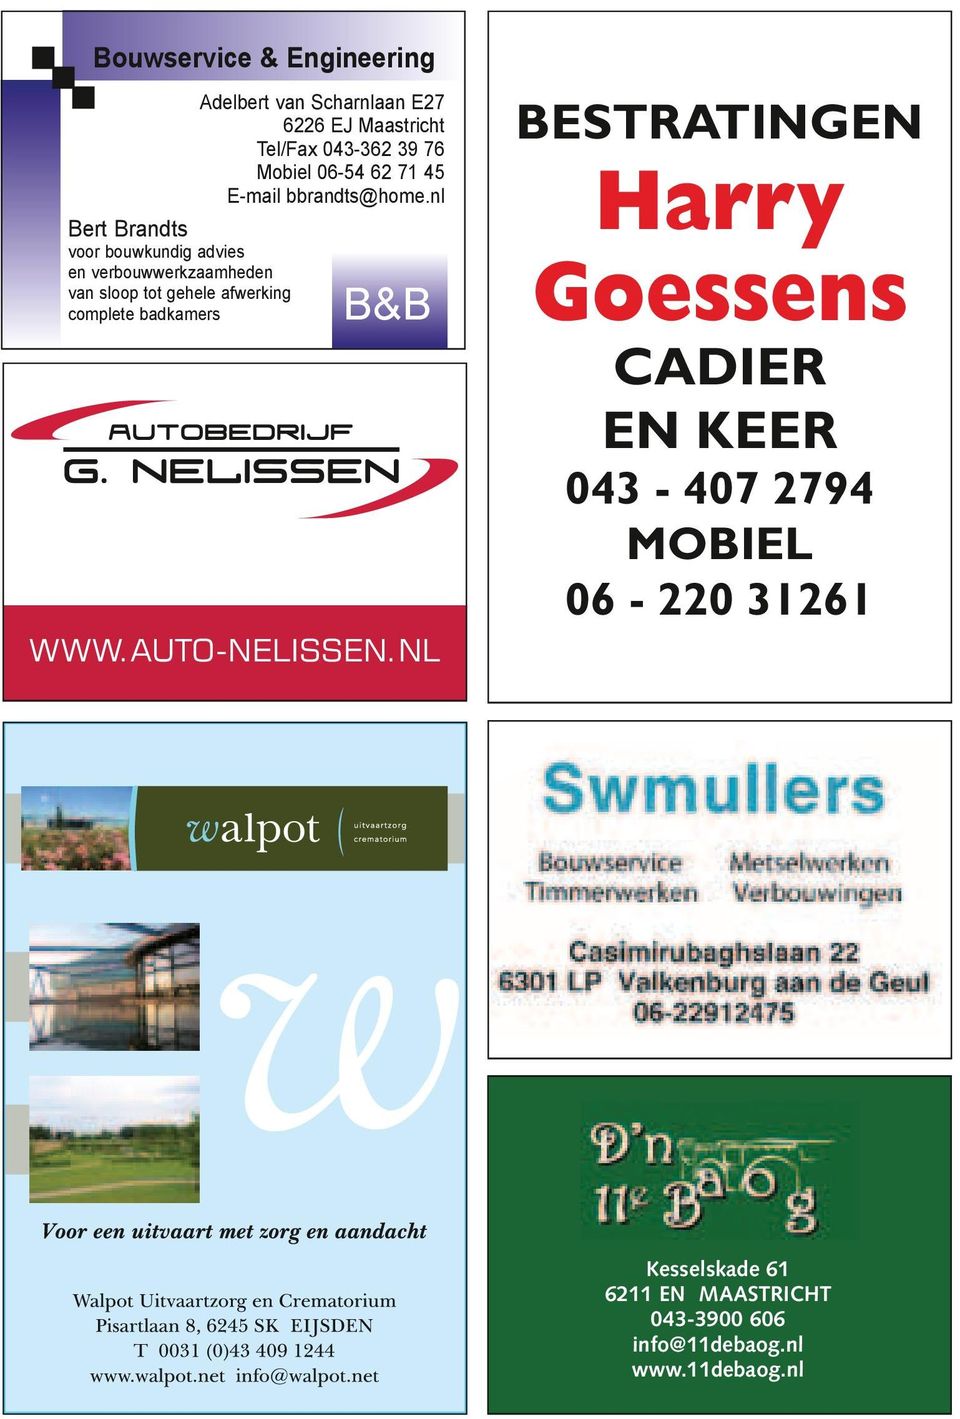 pdf 1 11-8-2011 9:22:31 www.auto-nelissen.nl Bestratingen Harry Goessens cadier en keer 043-407 2794 MoBiel 06-220 31261 067824.